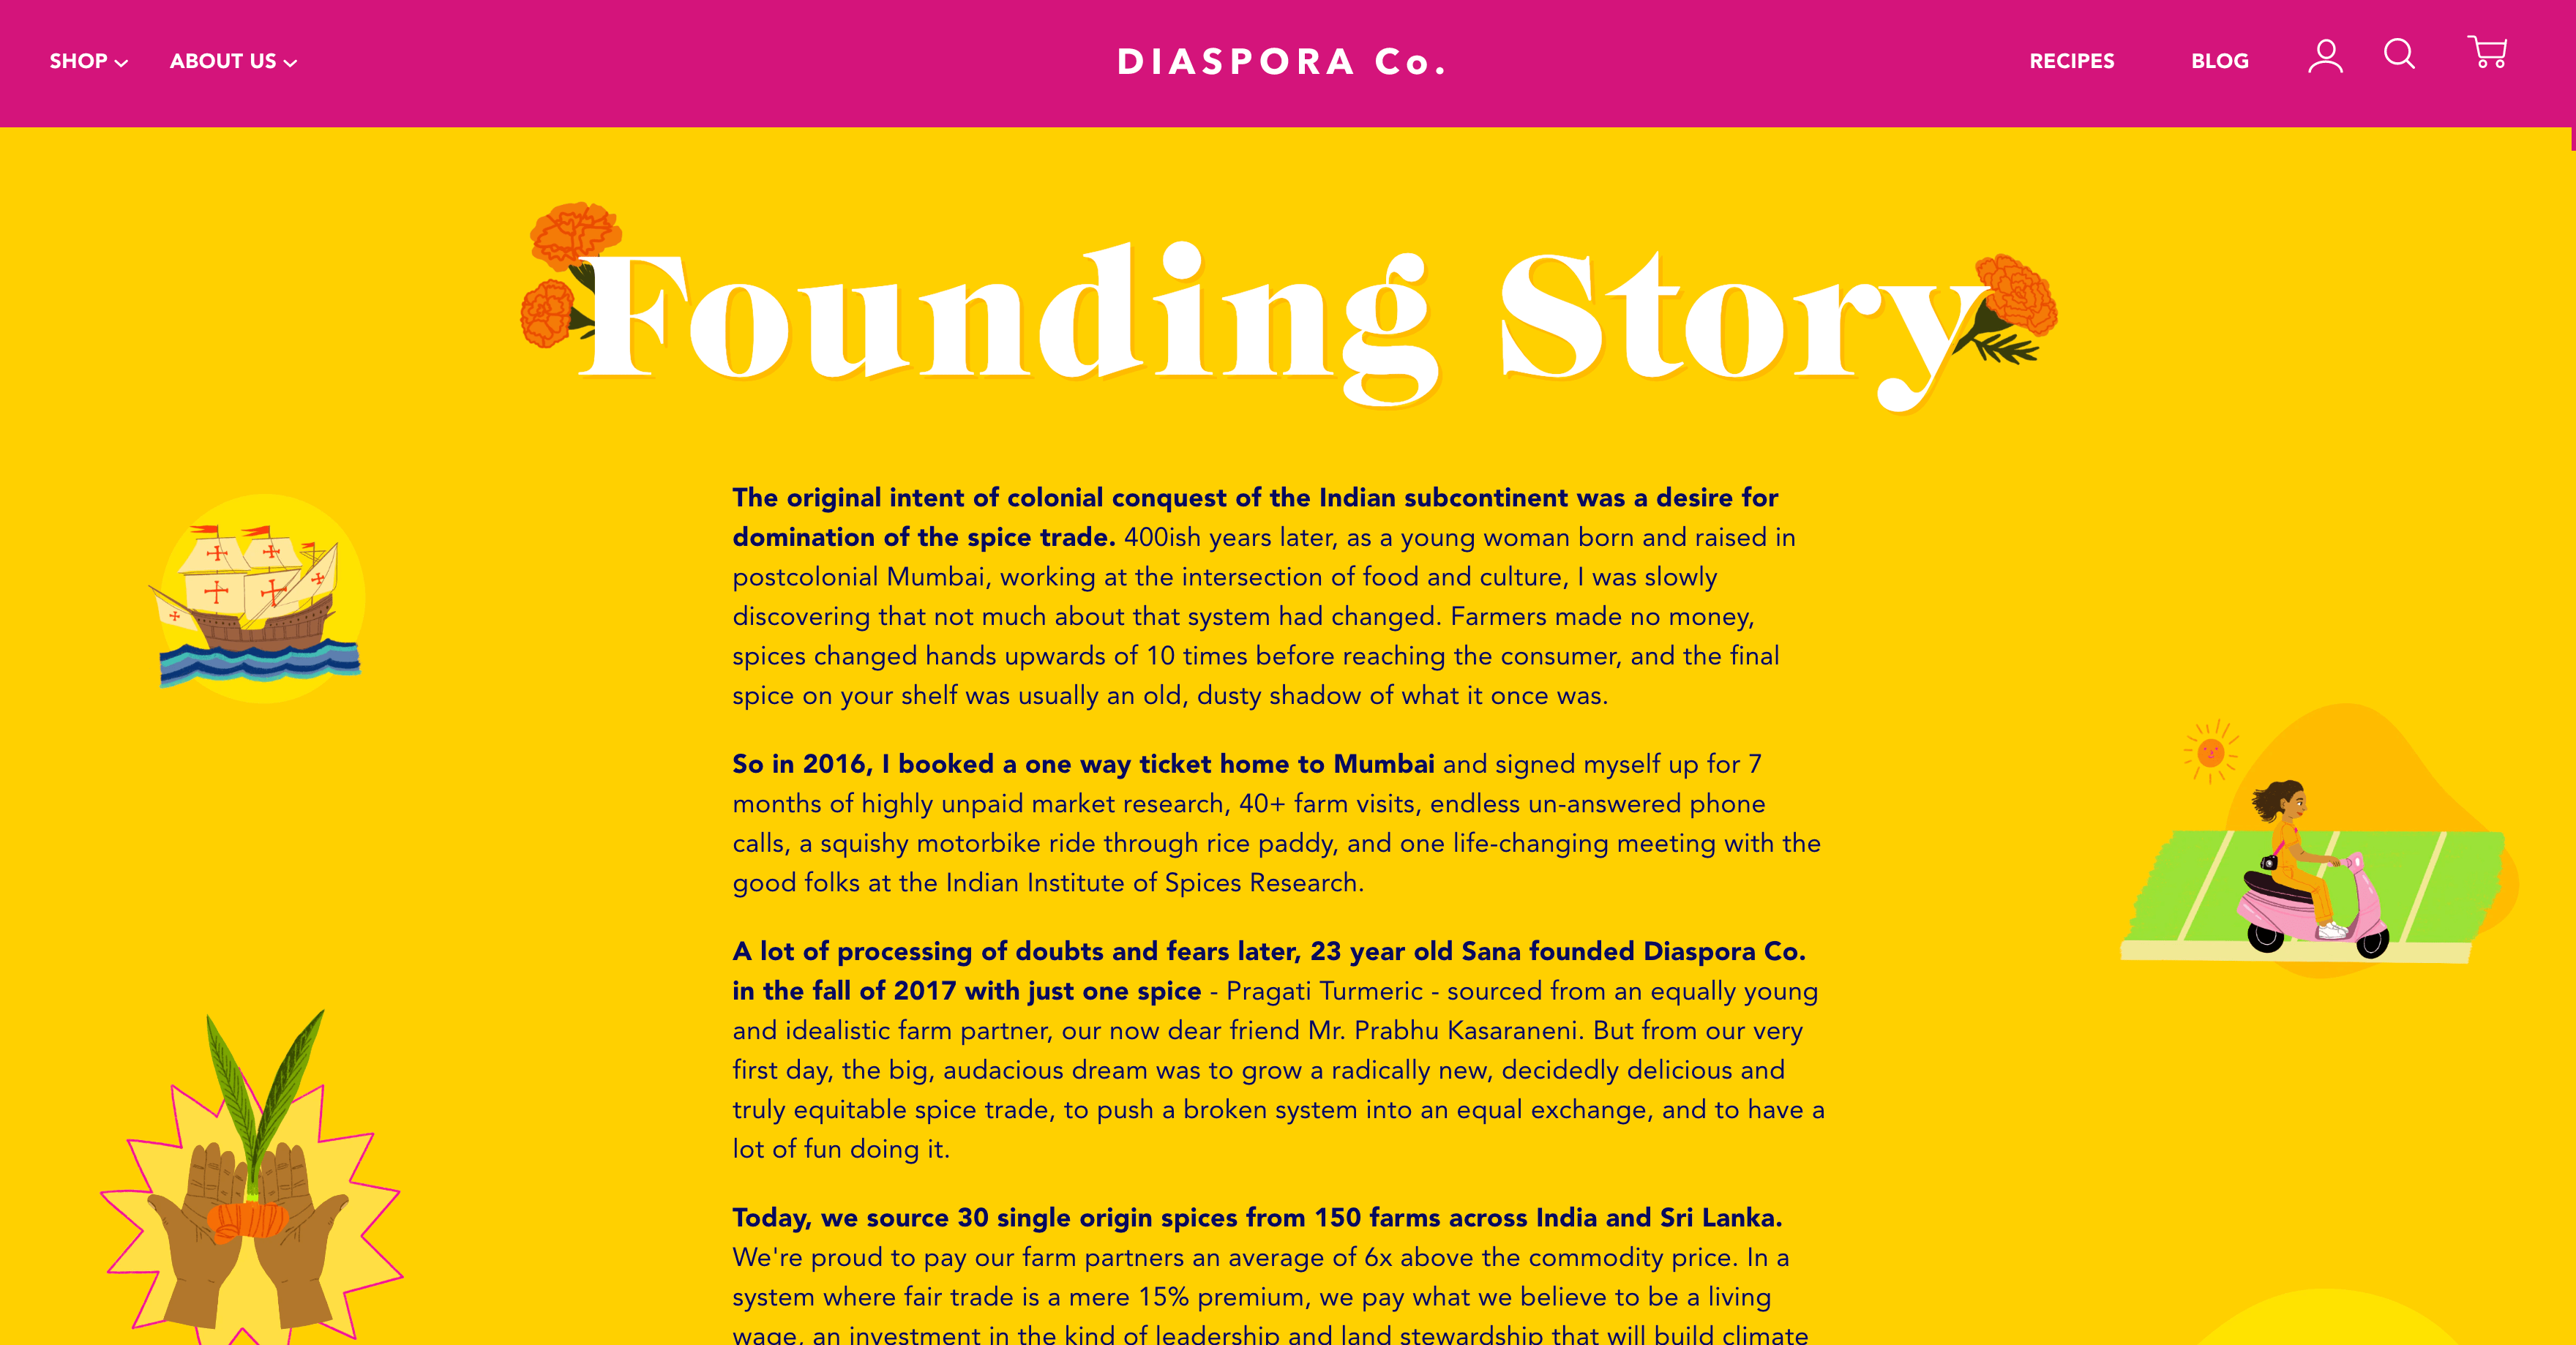 copy of the founding story on the diaspora website